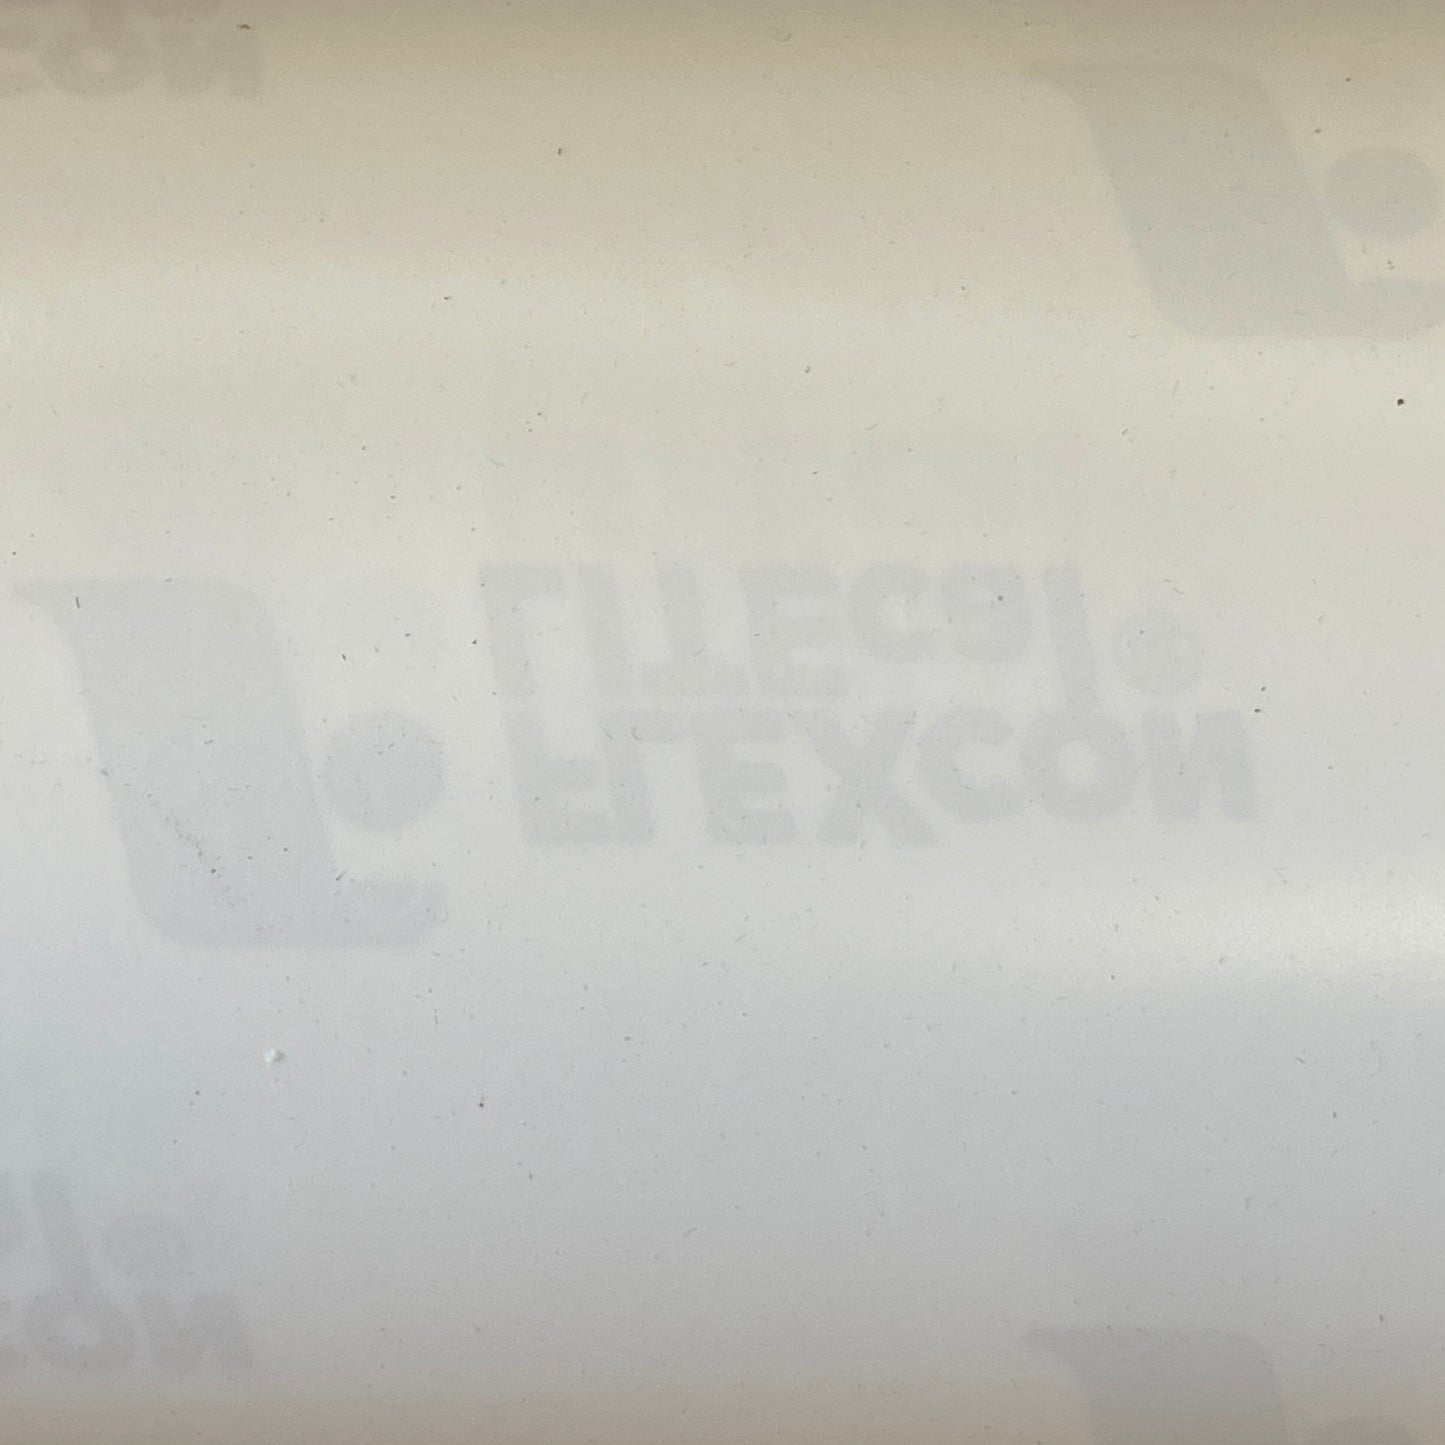 FLEXCON LITEcal Printable White Backlit Vinyl Transit Advertising Signage 60"X300' FLX000638 (New)